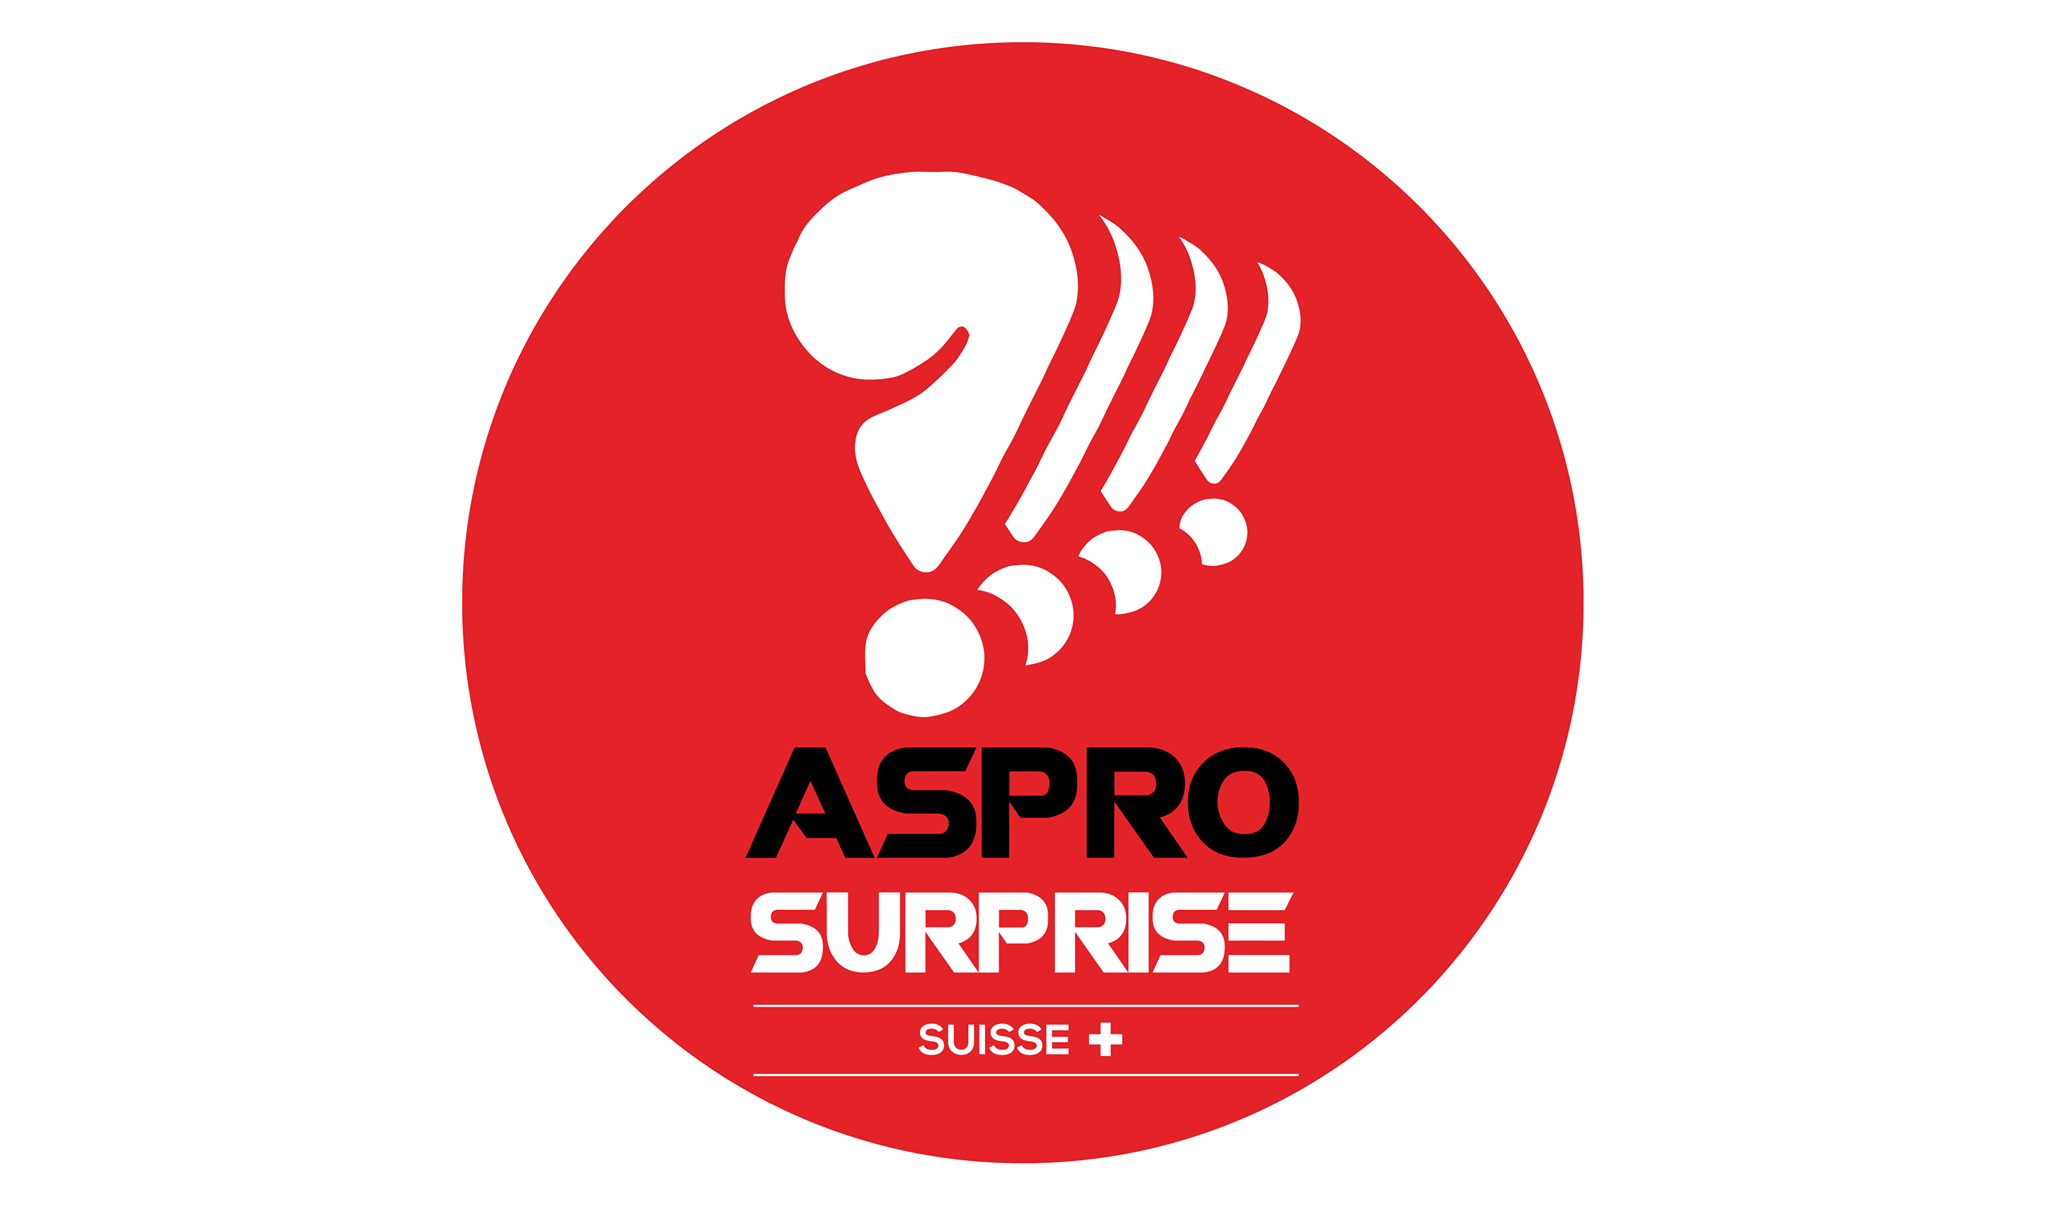 Aspro_surprise_logo